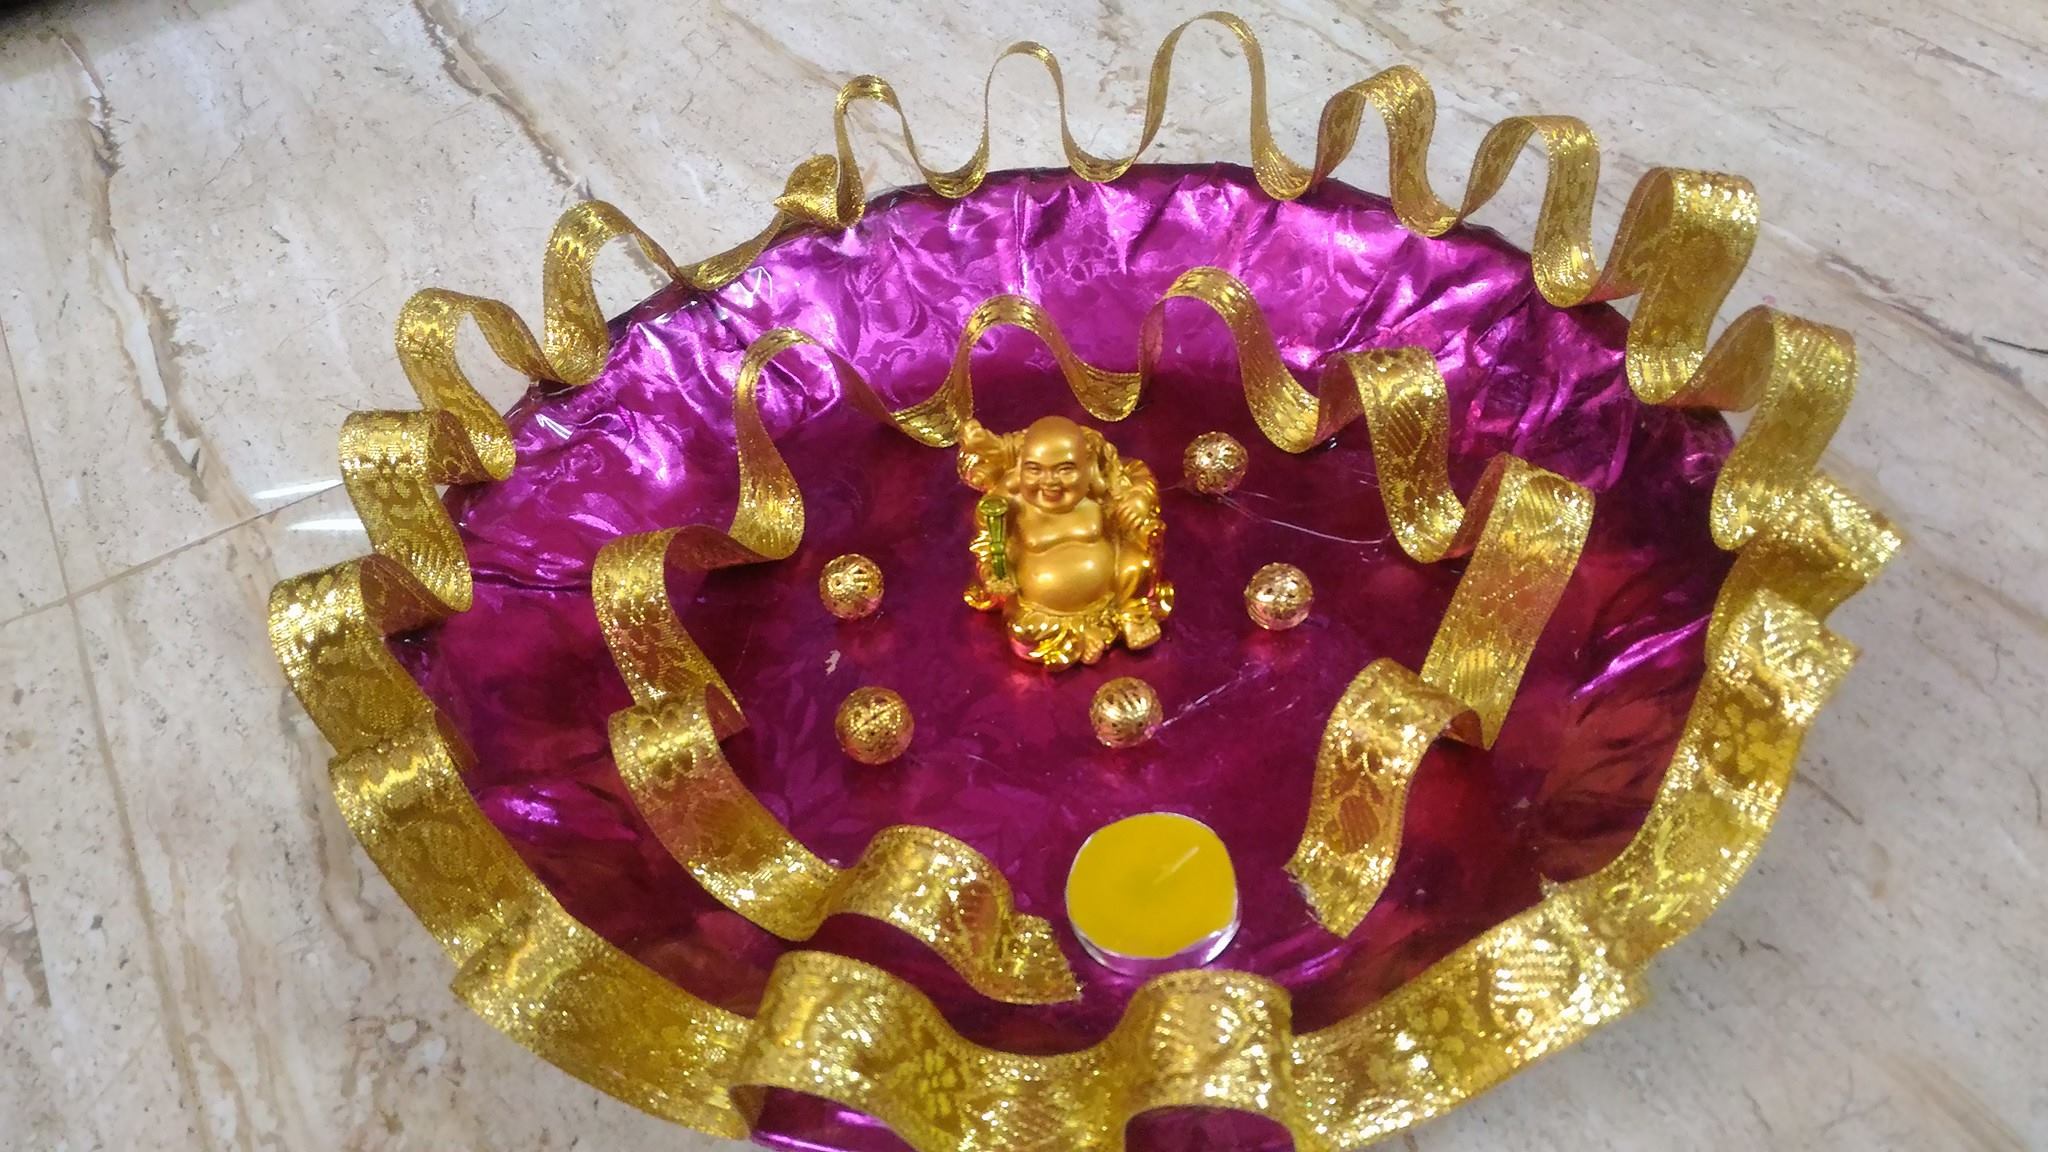  Chandra's Wedding, aarthi plates & return gifts-img11